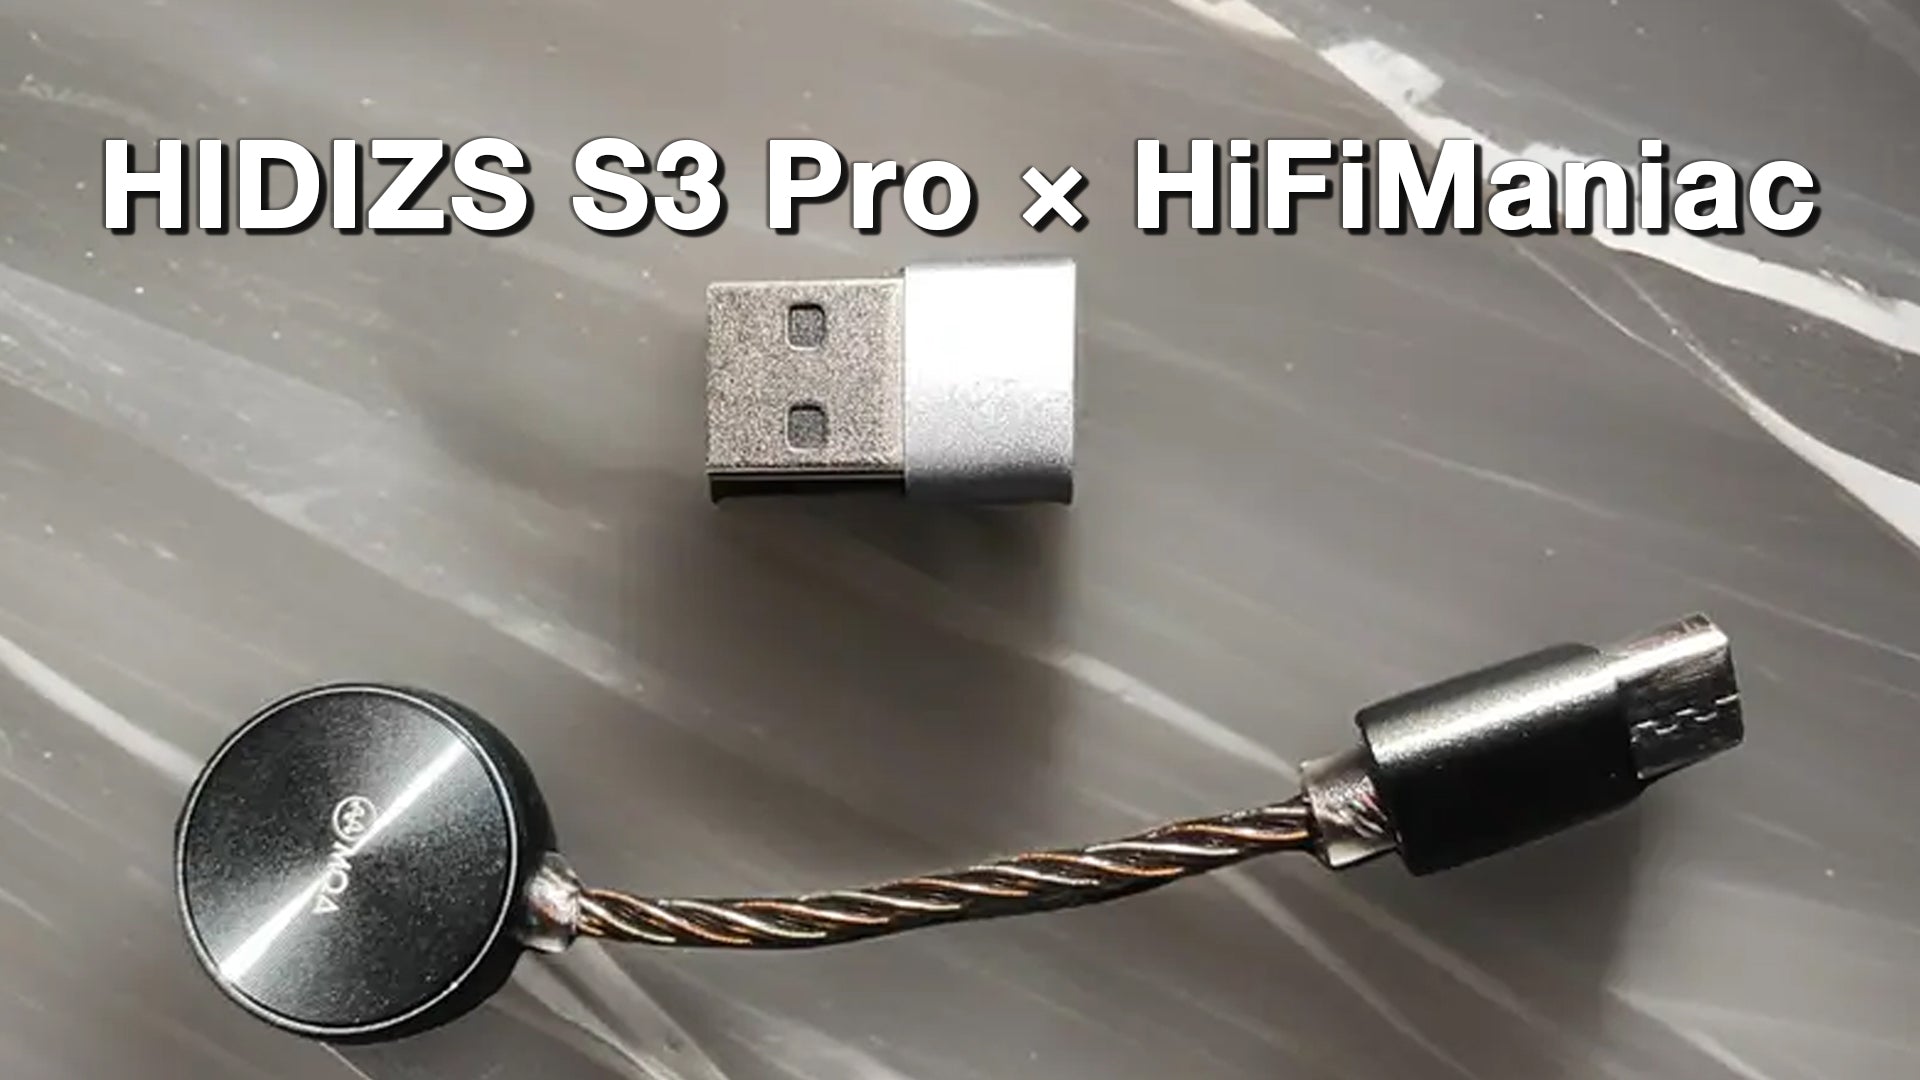 HIDIZS S3 Pro Review - HiFiManiac